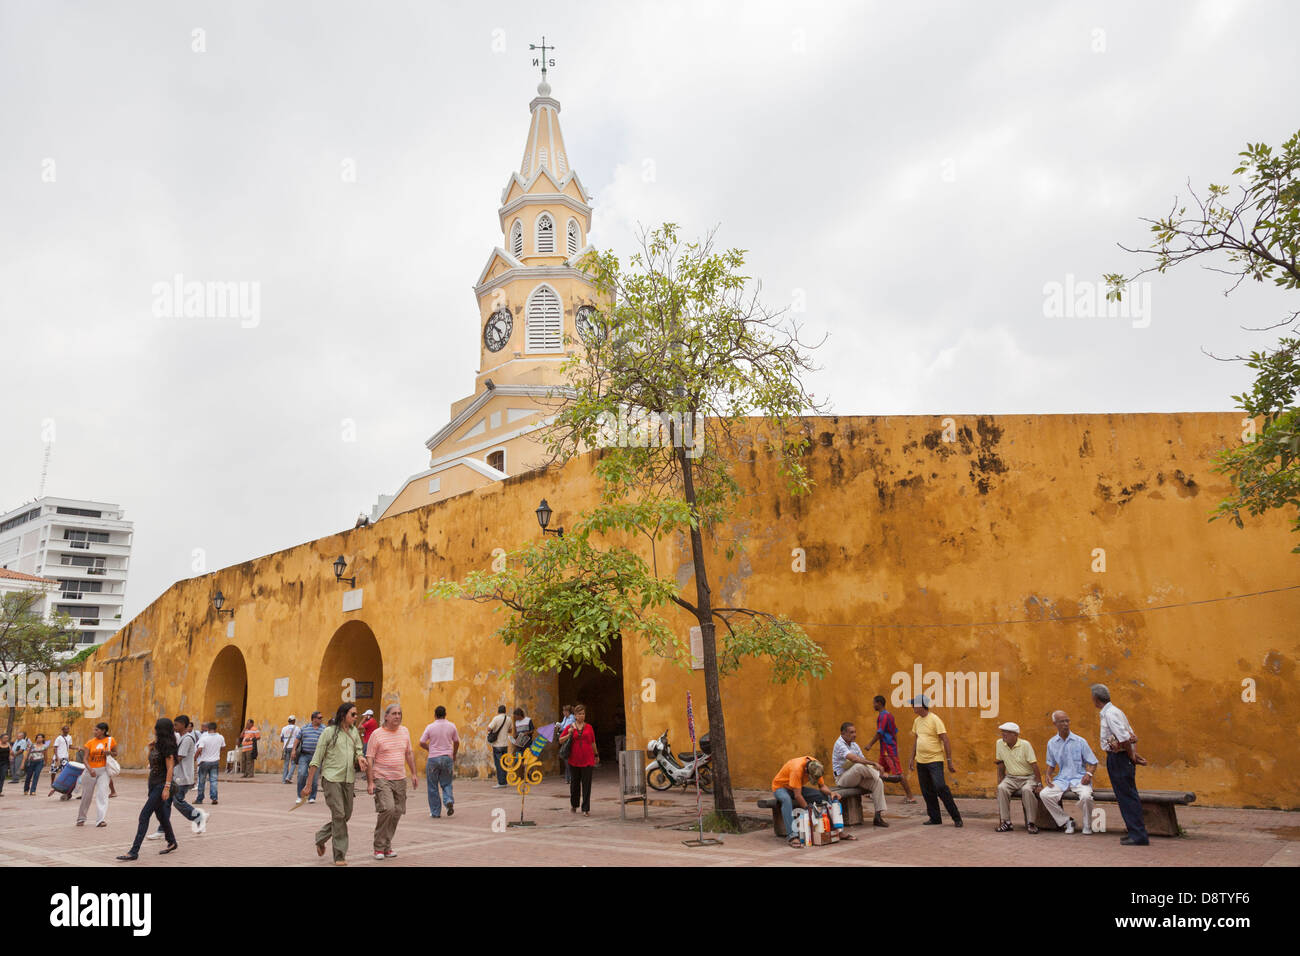 Plaza de los Coches, Torre del Reloj, Clock Tower, Cartagena, Colombia Stock Photo